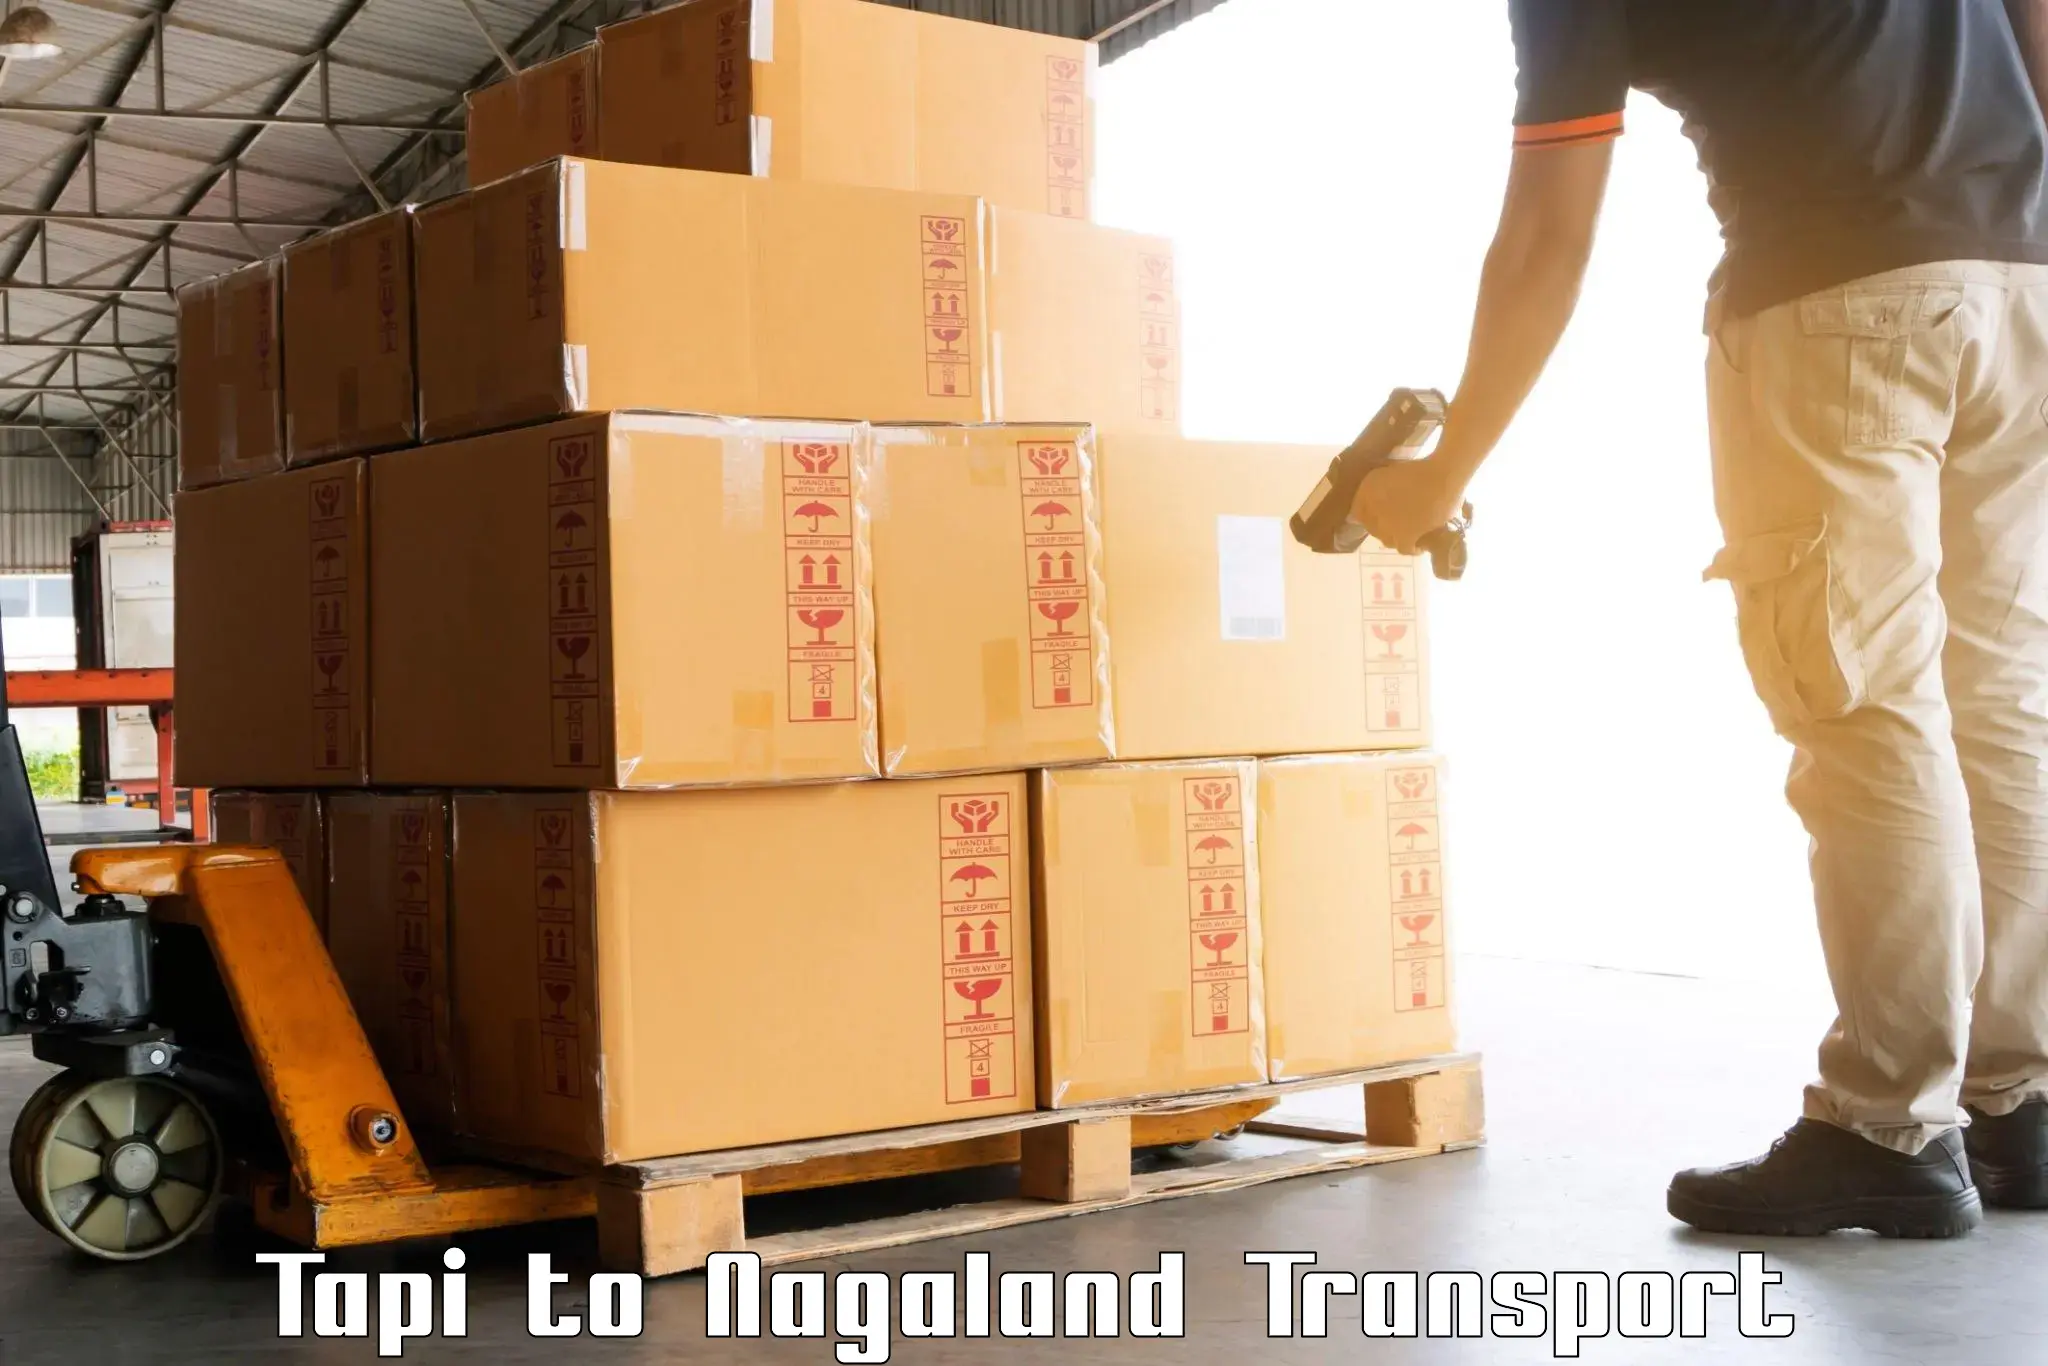 Shipping partner Tapi to Nagaland